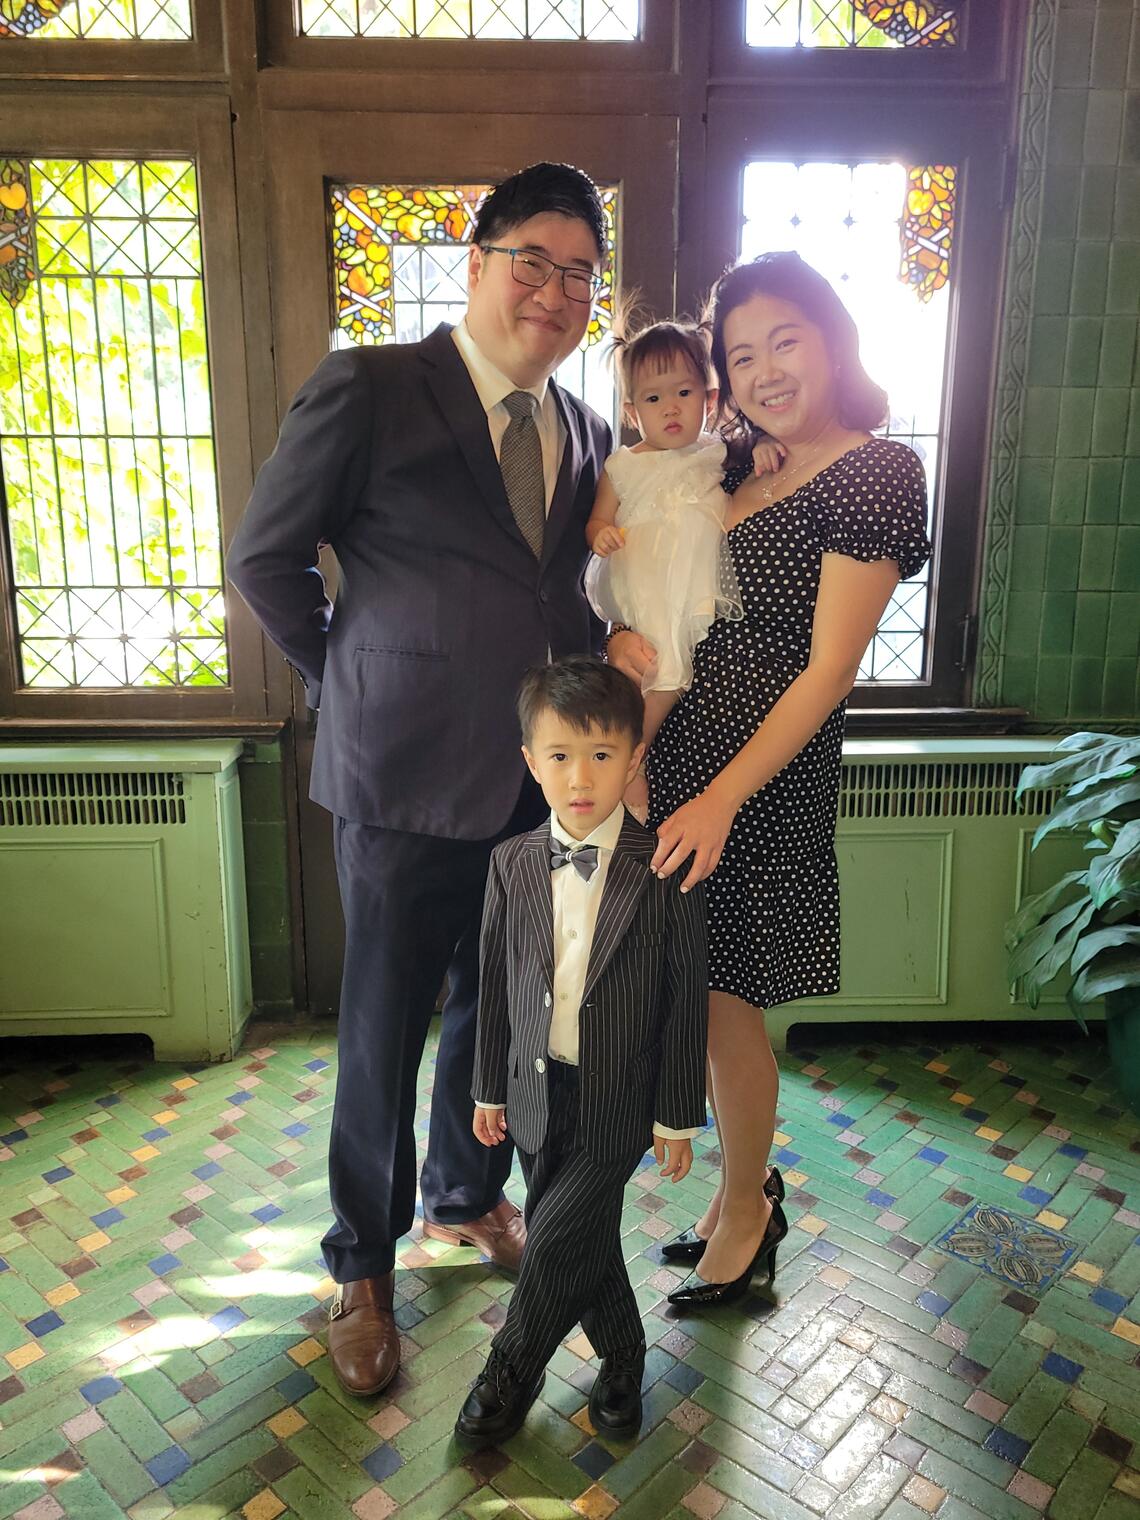 Ben Leung, JD’14, and Edith Thai, JD’15, with their children.